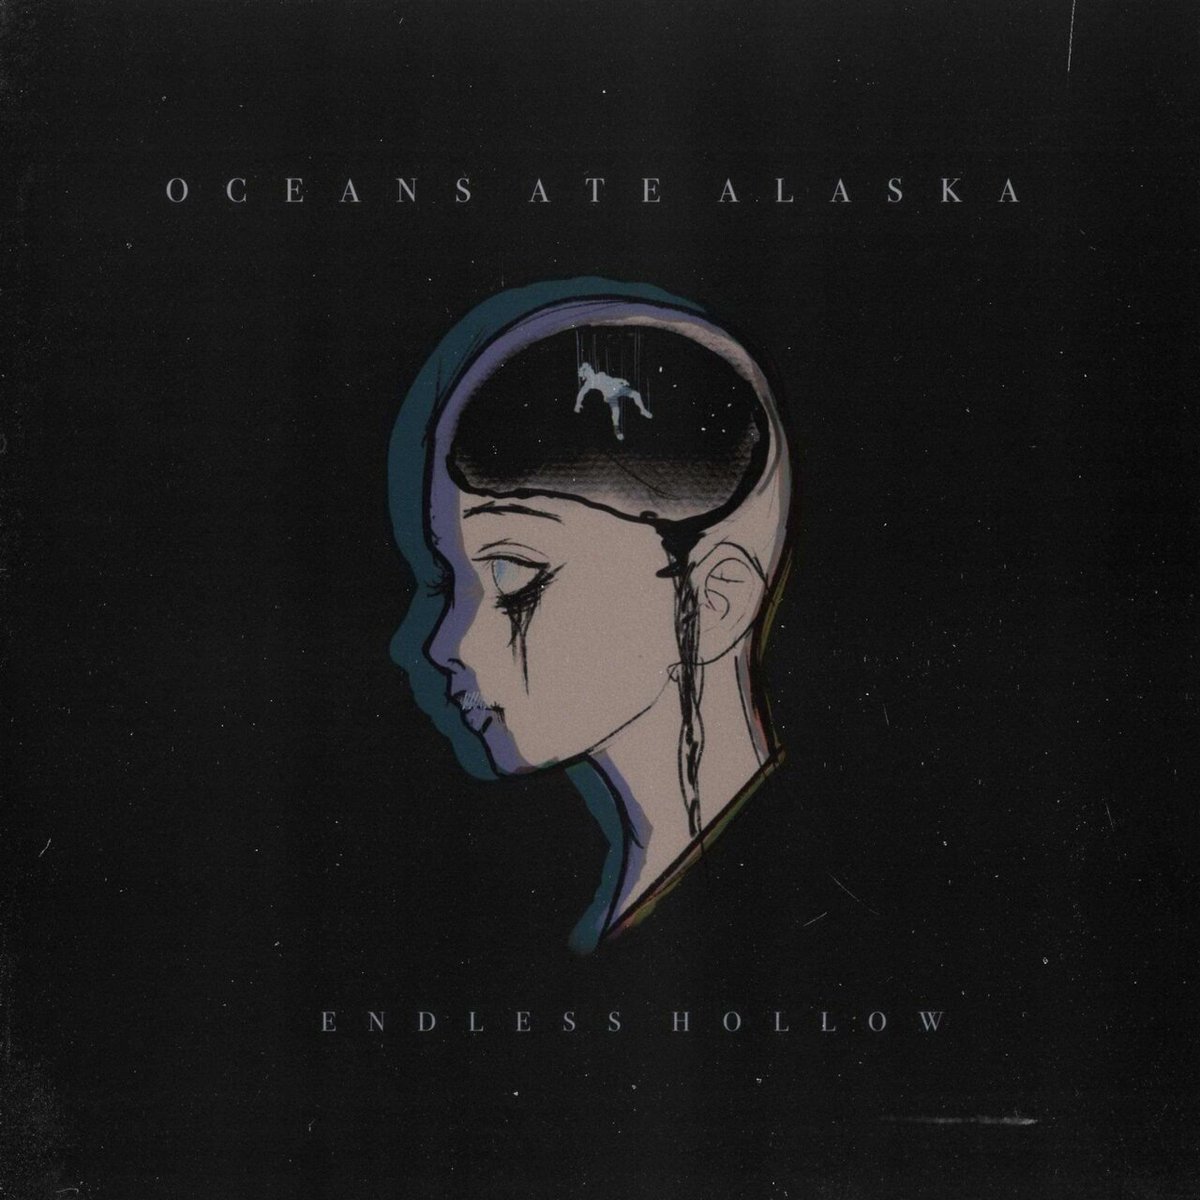 Oceans Ate Alaska - Endless Hollow [SINGLE] (2024)
Progressive Metalcore
UK
#rocknewsreleases #rocknewsrelease #rocknews #rock #rnr #rn #progressivemetalcore #oceansatealaska 

@oceansatealaska